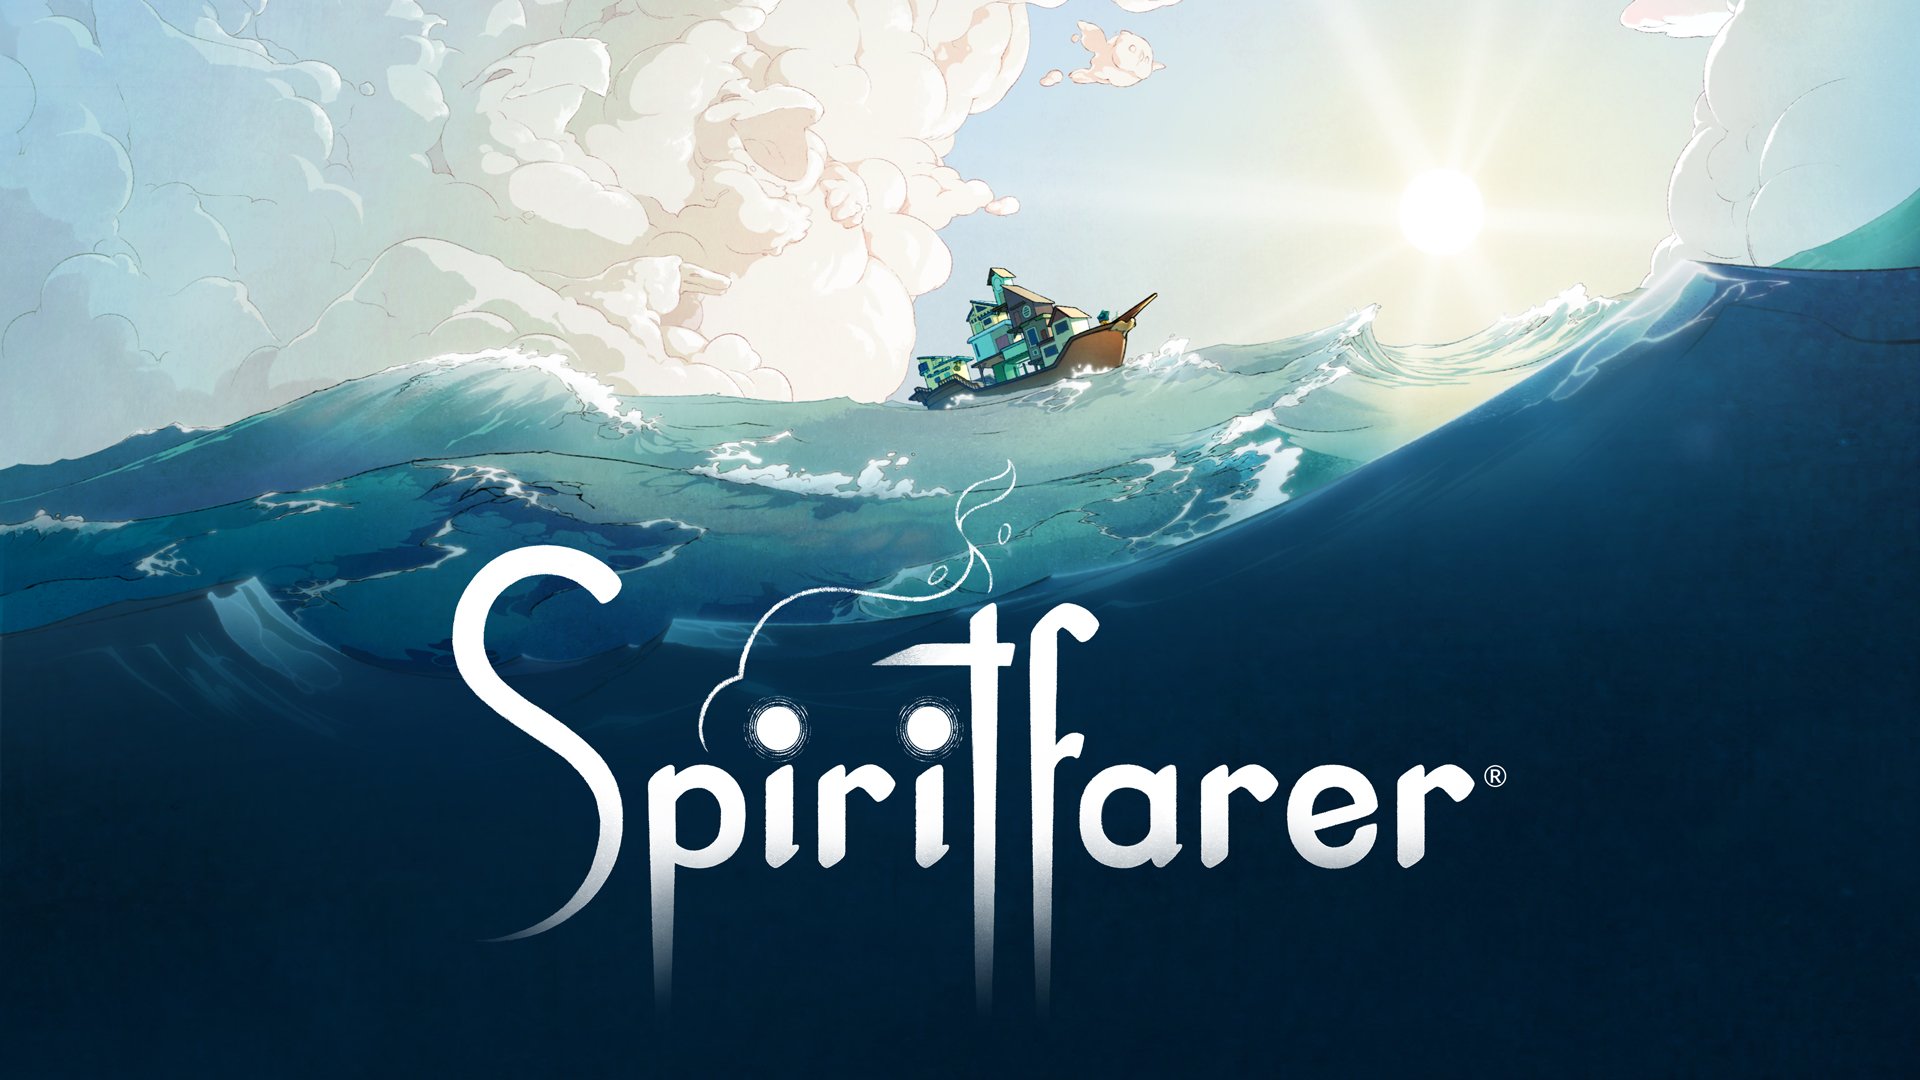 Spiritfarer: Farewell Edition PC Game Download For Free